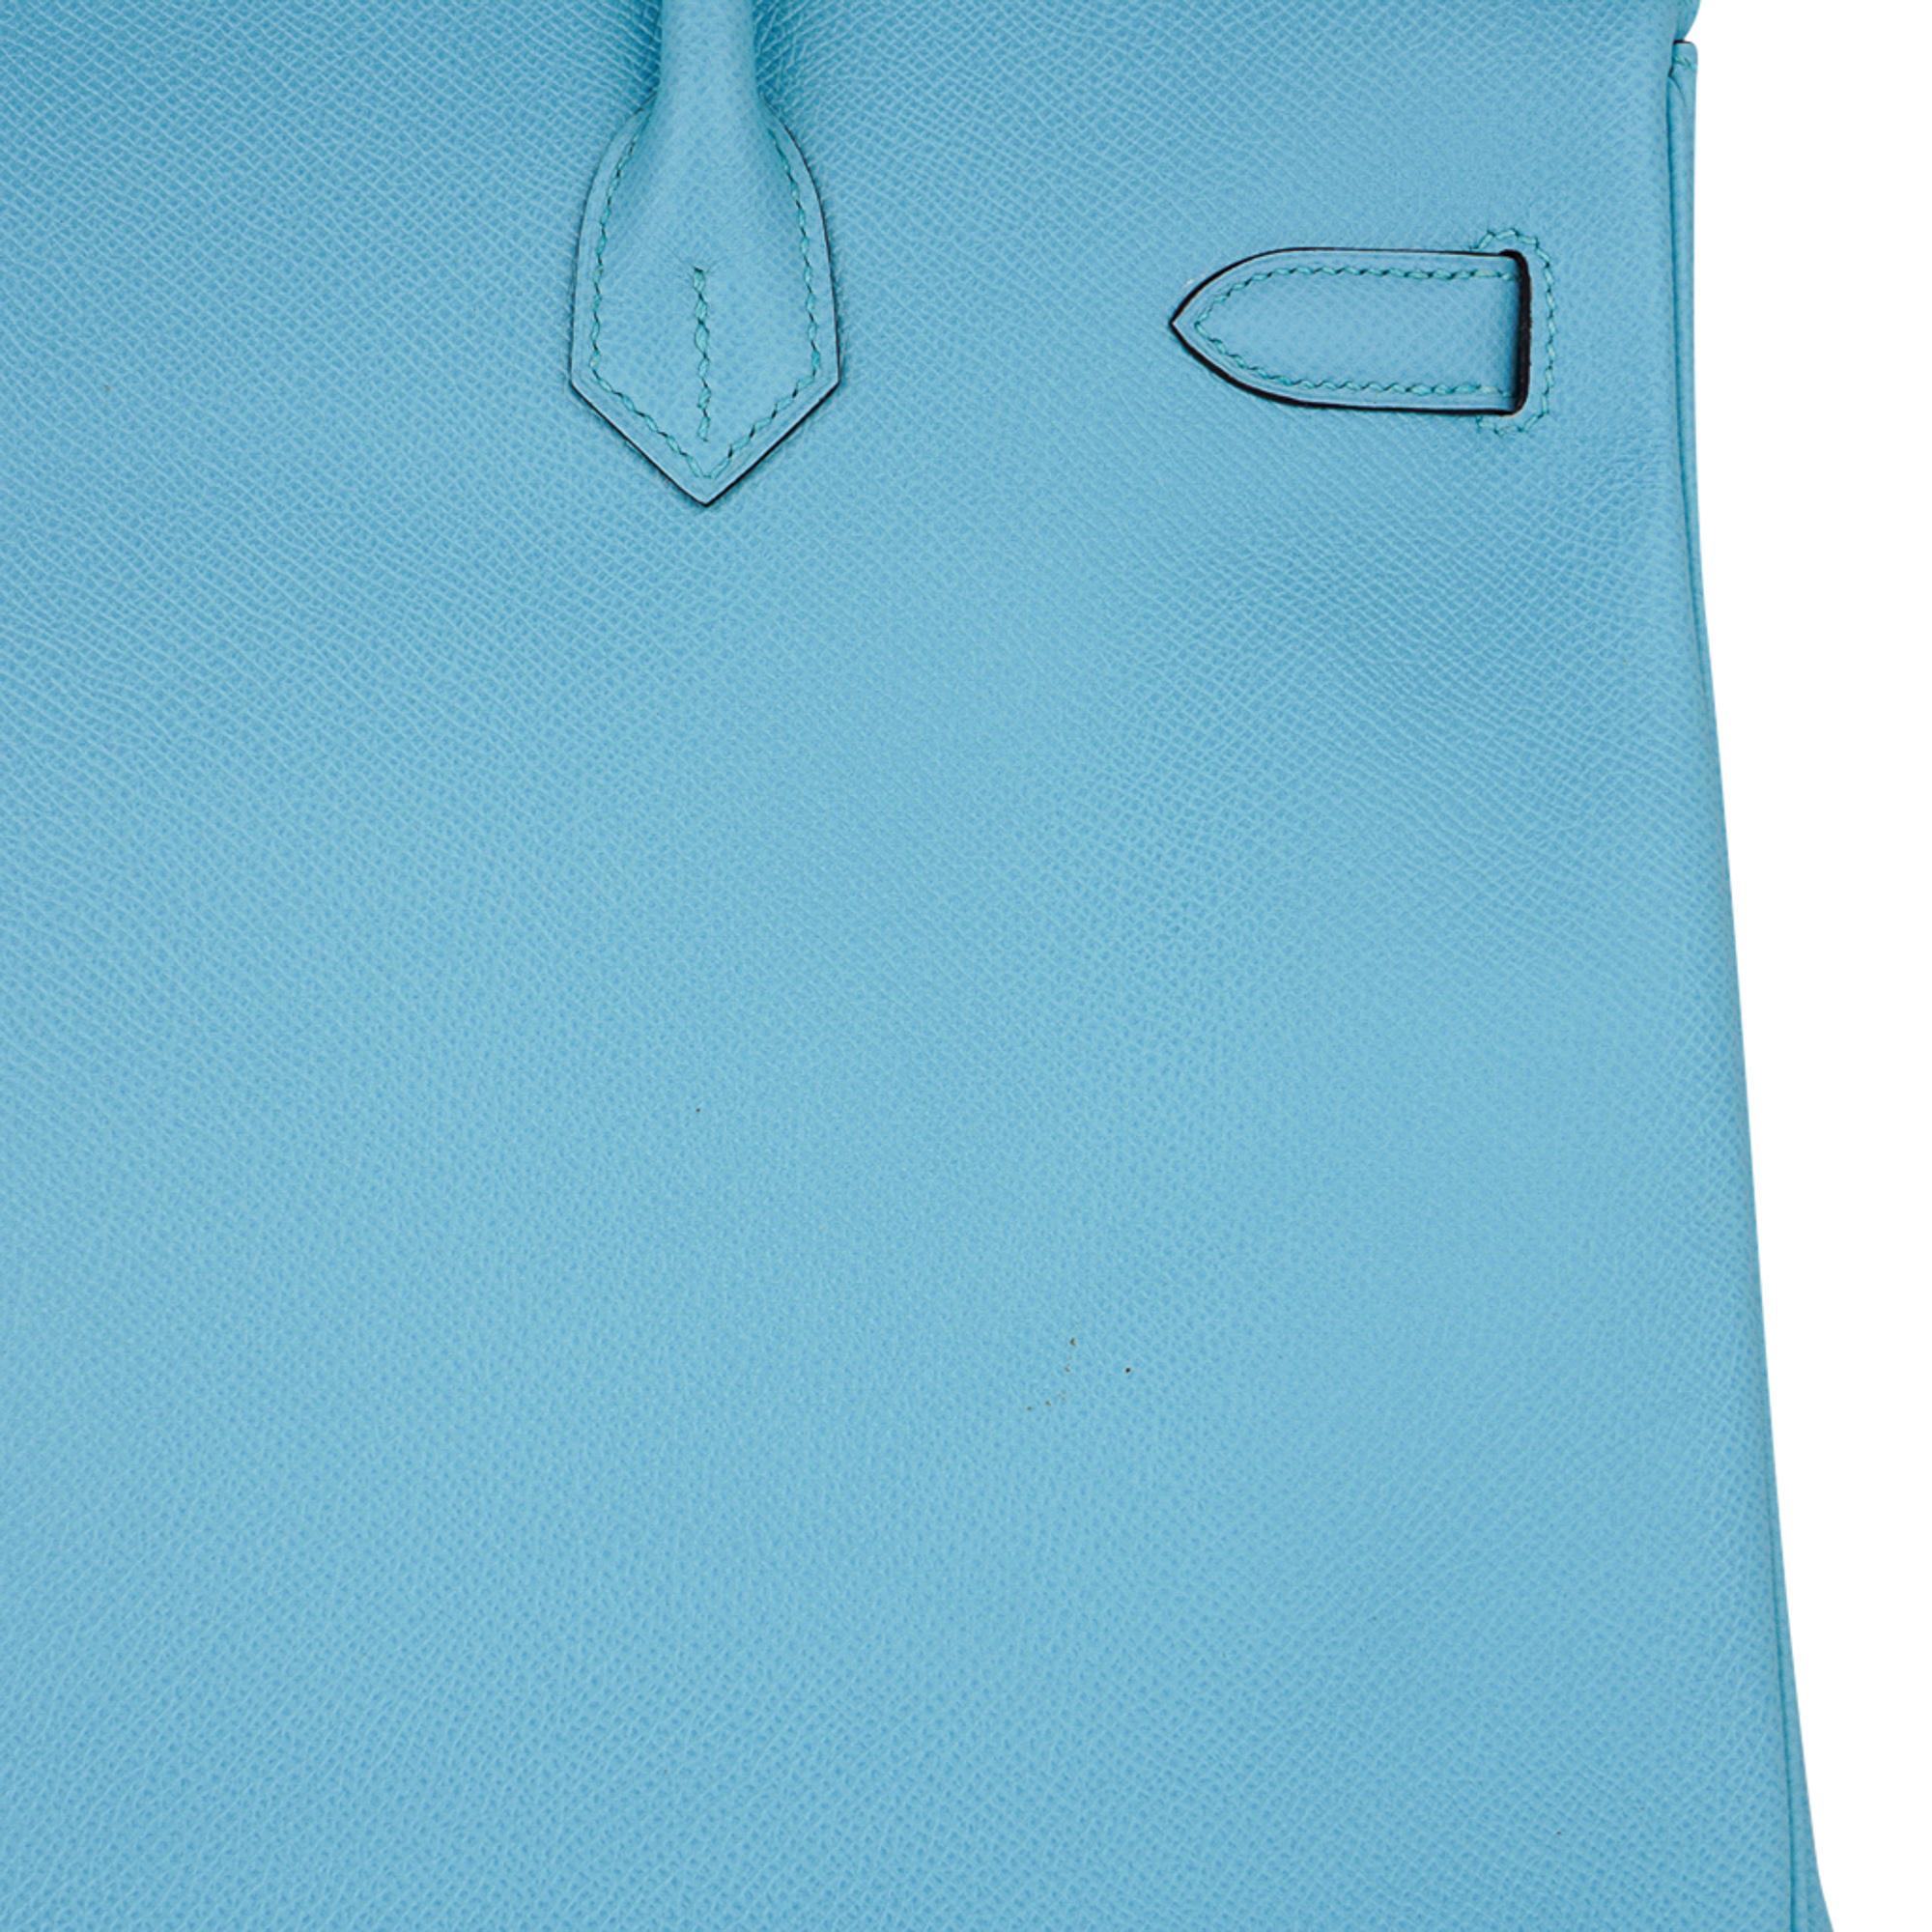 Hermes Birkin 35 Bag Blue Atoll Gold Hardware Epsom Leather 10